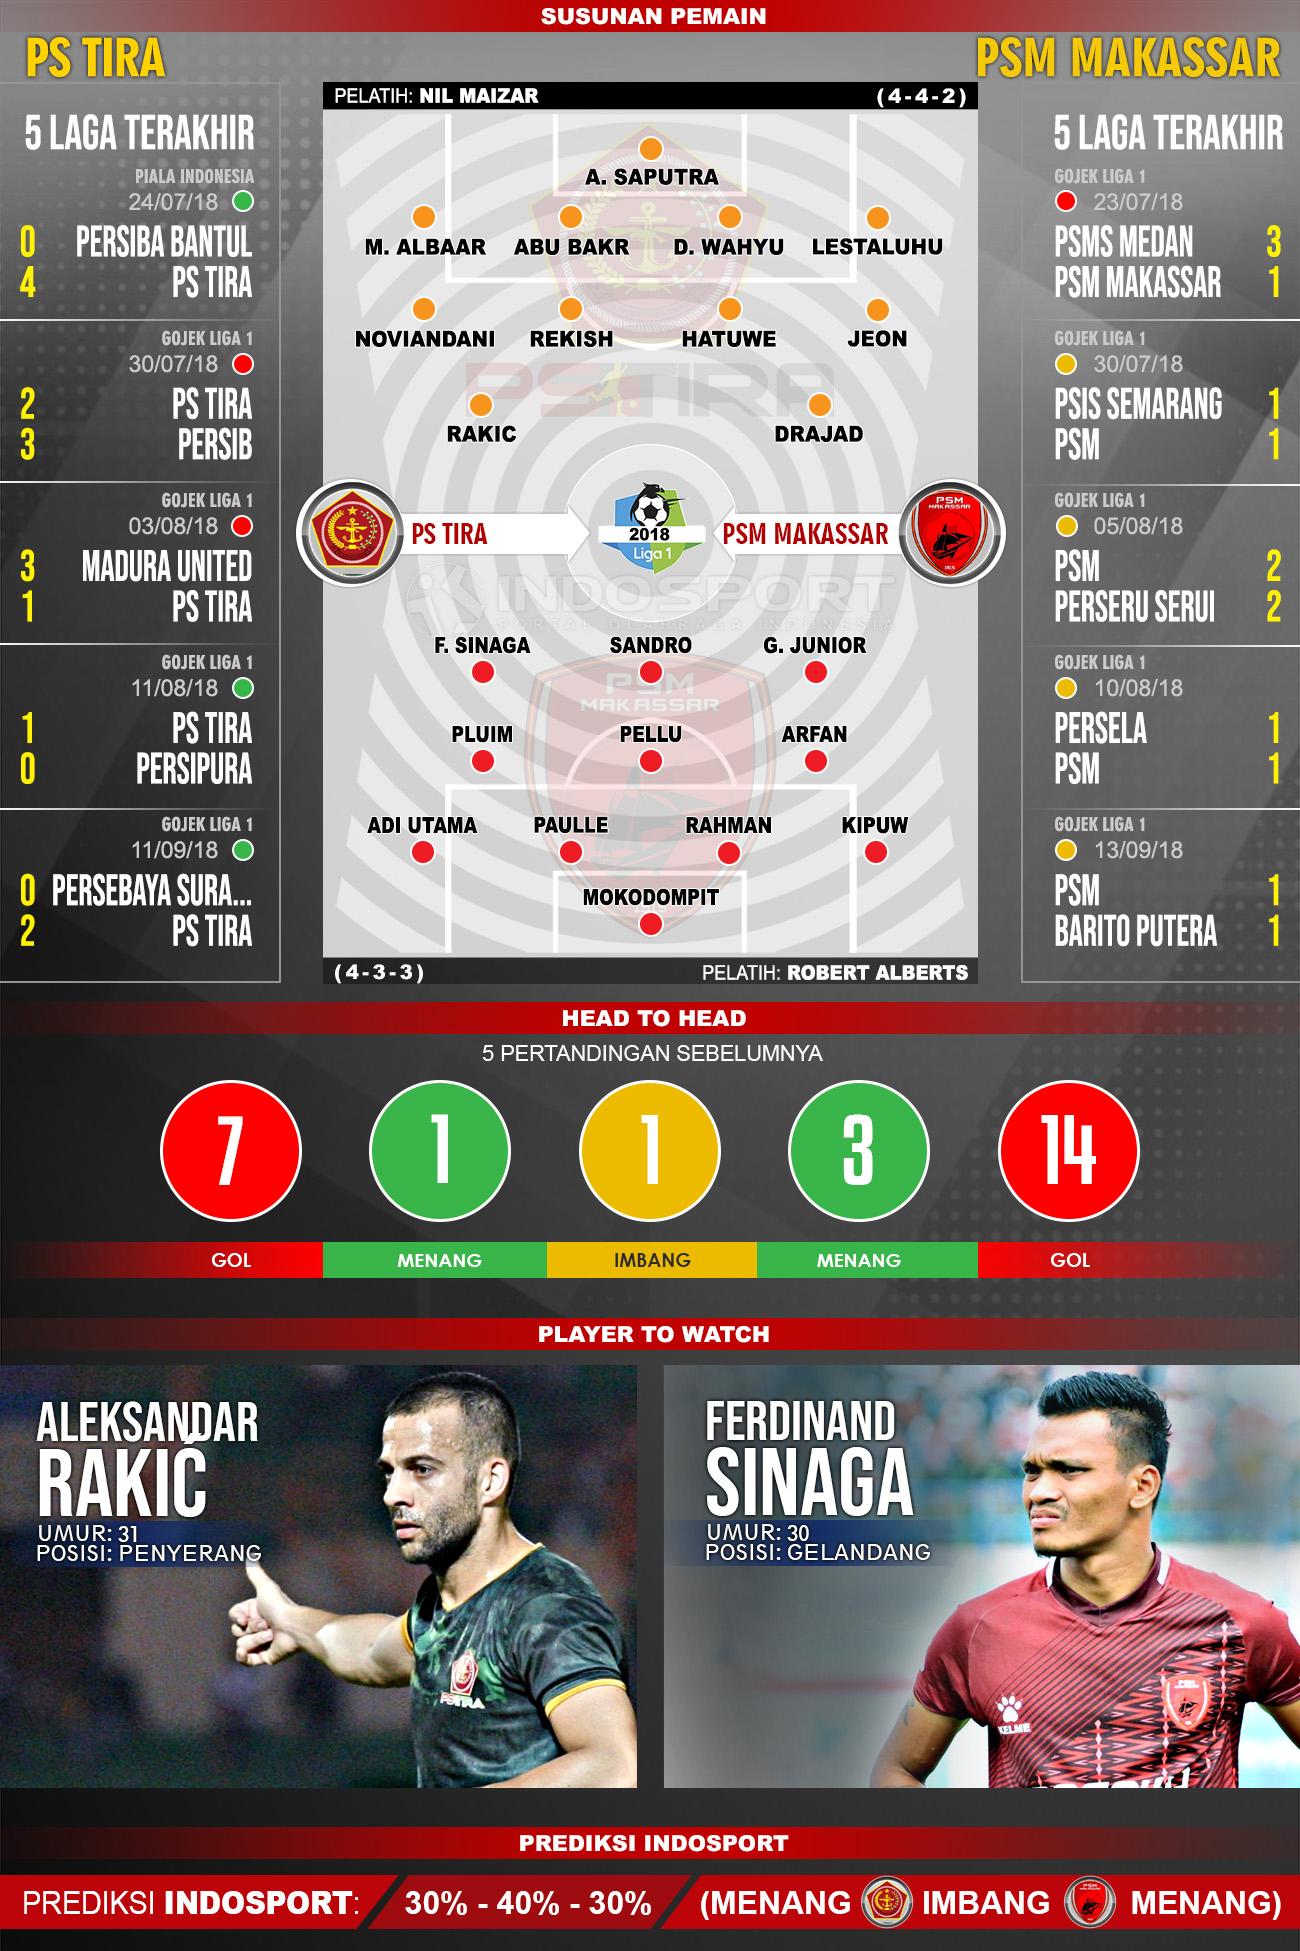 PS Tira vs PSM Makassar (Susunan Pemain - Lima Laga Terakhir - Player to Watch - Prediksi Indosport) Copyright: Indosport.com